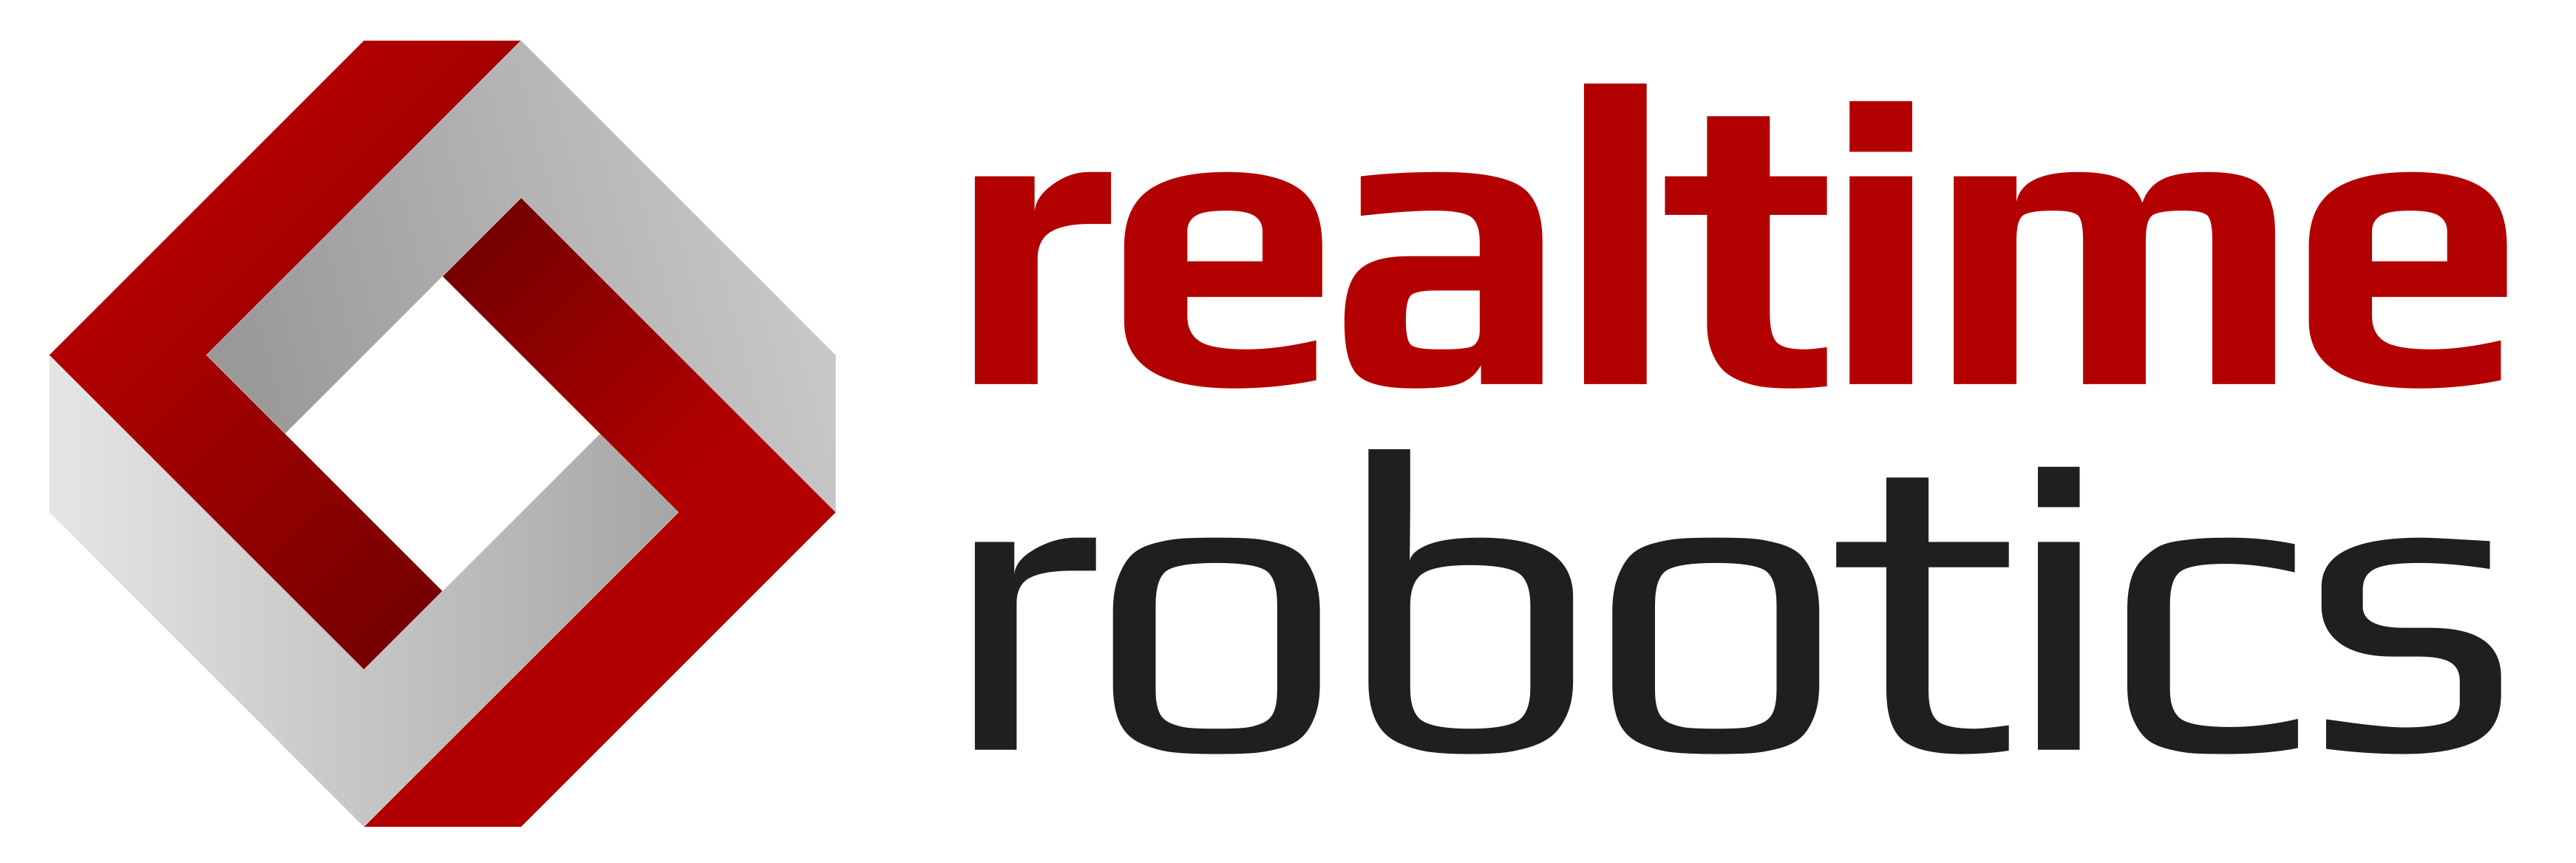 https://otc.duke.edu/wp-content/uploads/2022/09/Realtime-Robotics.png